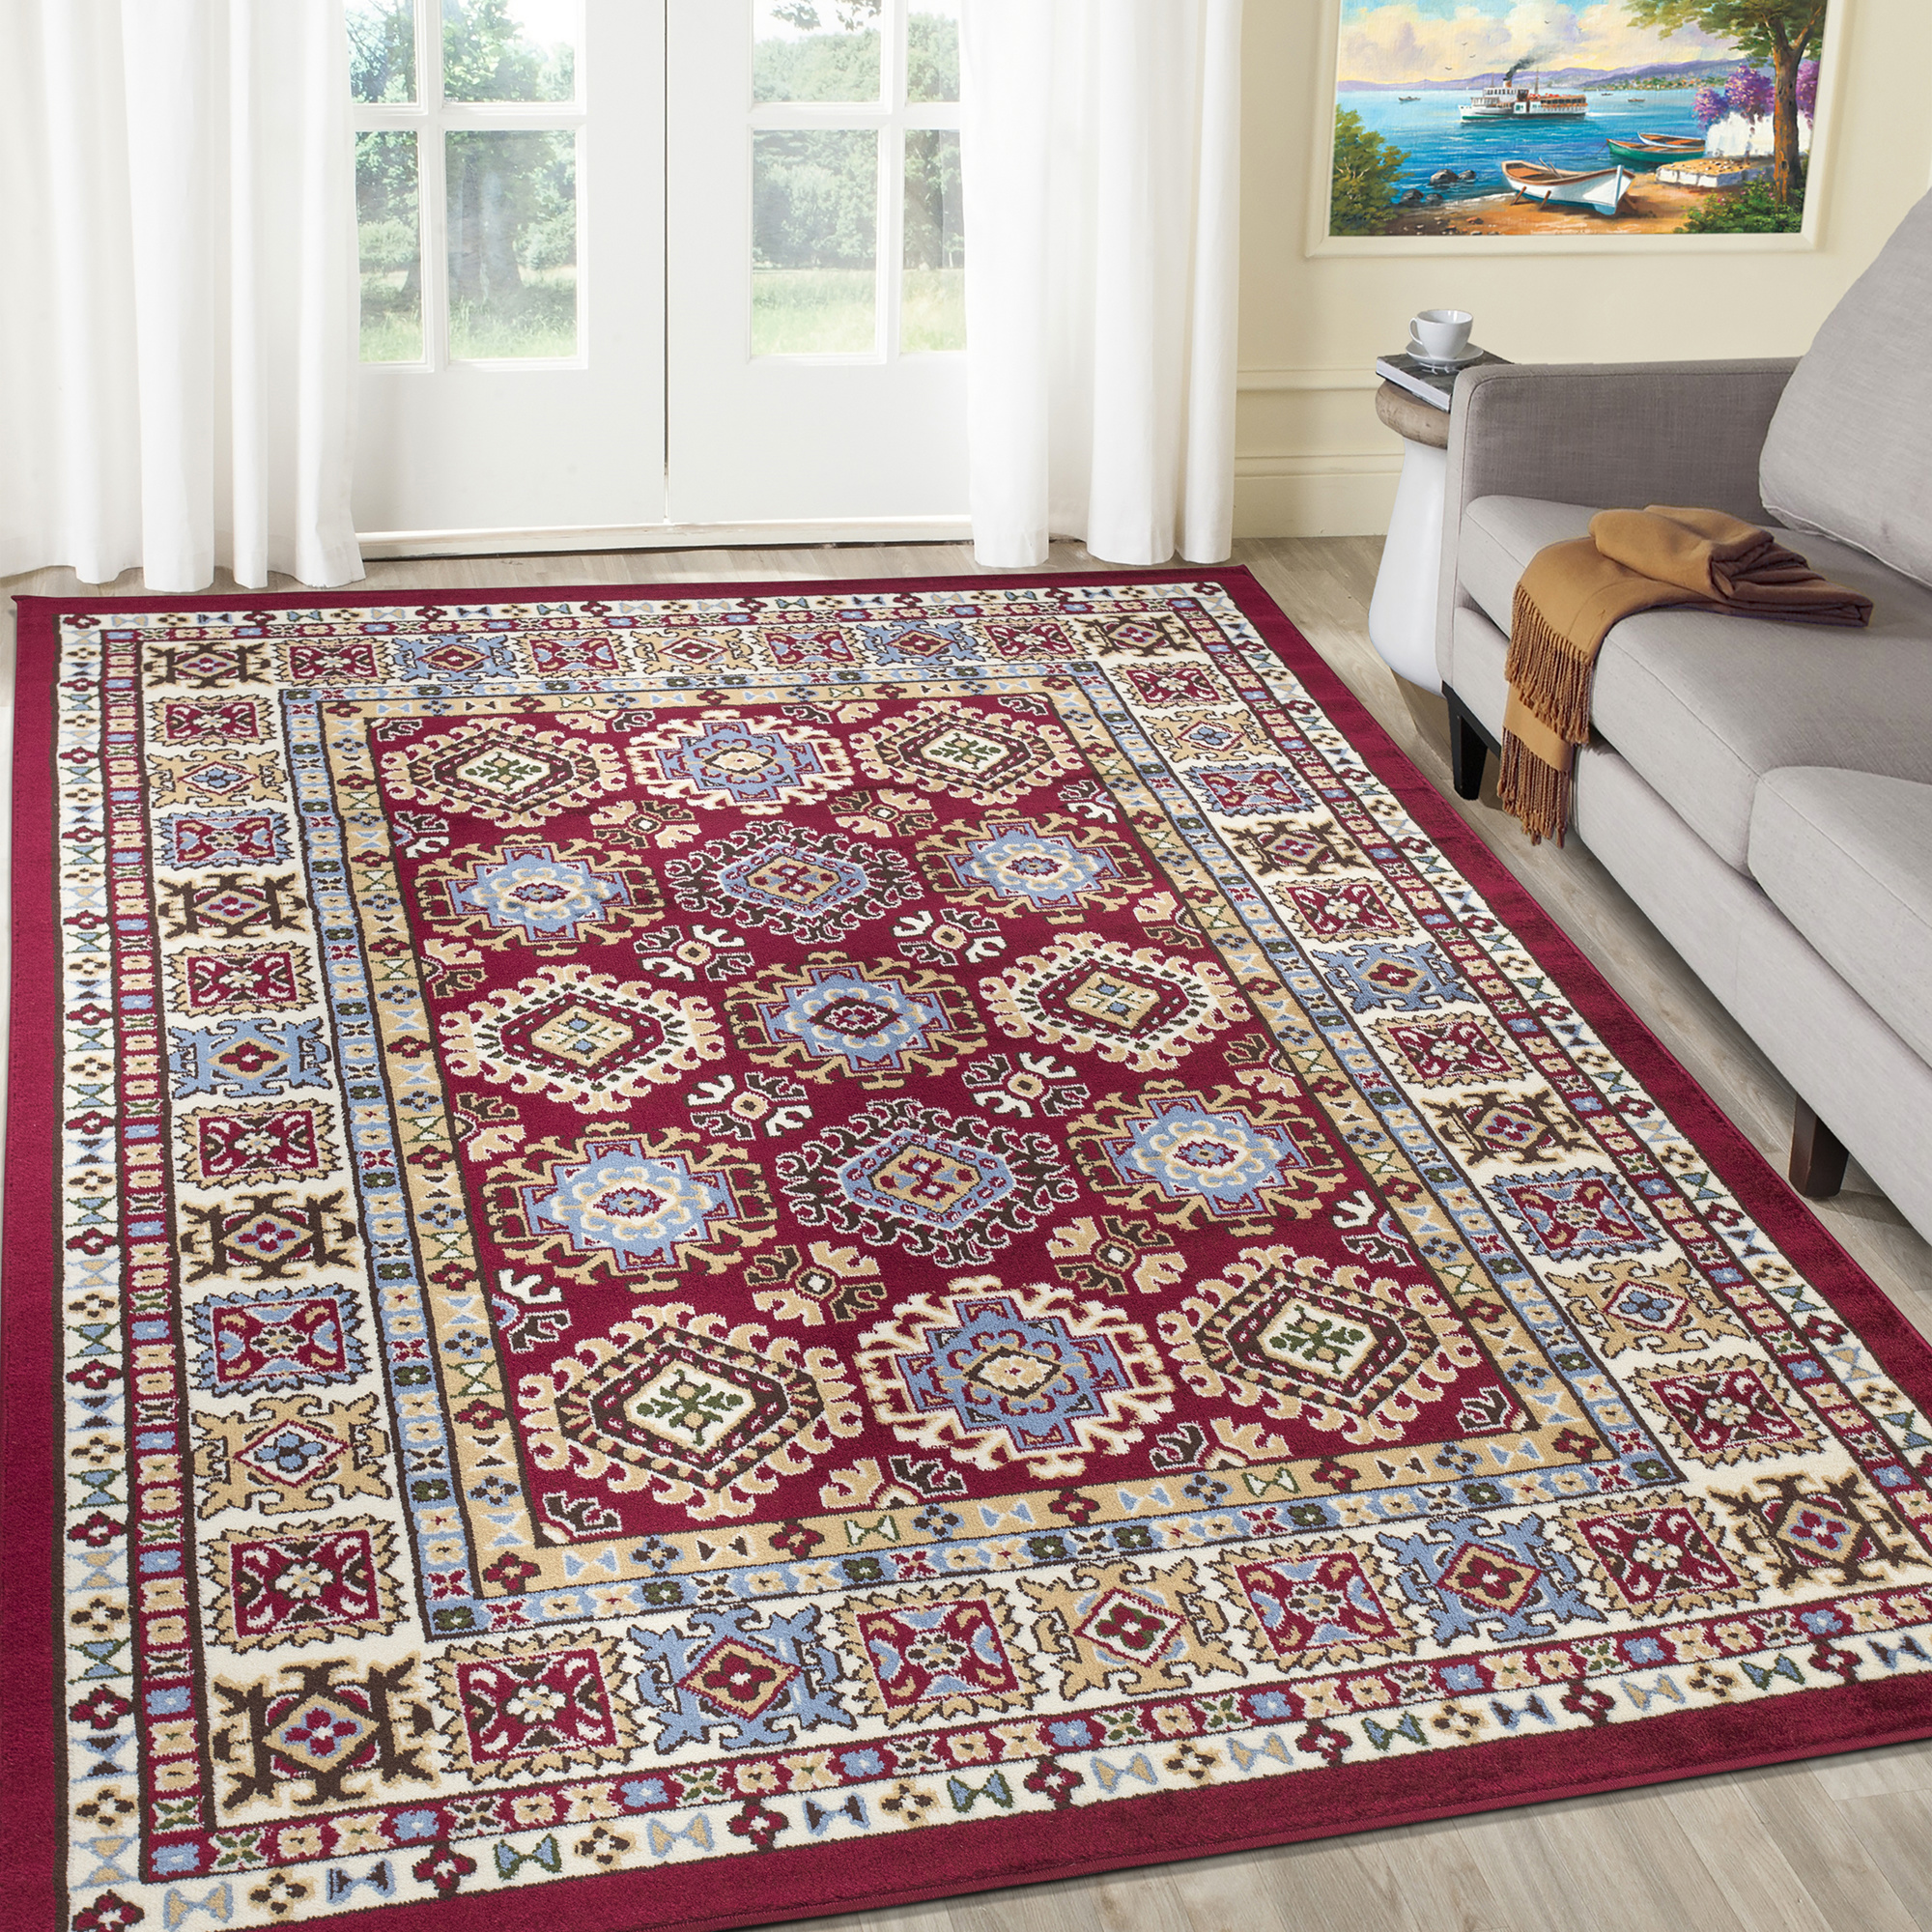 A2Z Qashqai 5577 Transitional Medallion Bohemian Pattern Large Office Soft Area  Rug Tapis Carpet (3x5 4x6 5x7 5x8 7x9 8x10)